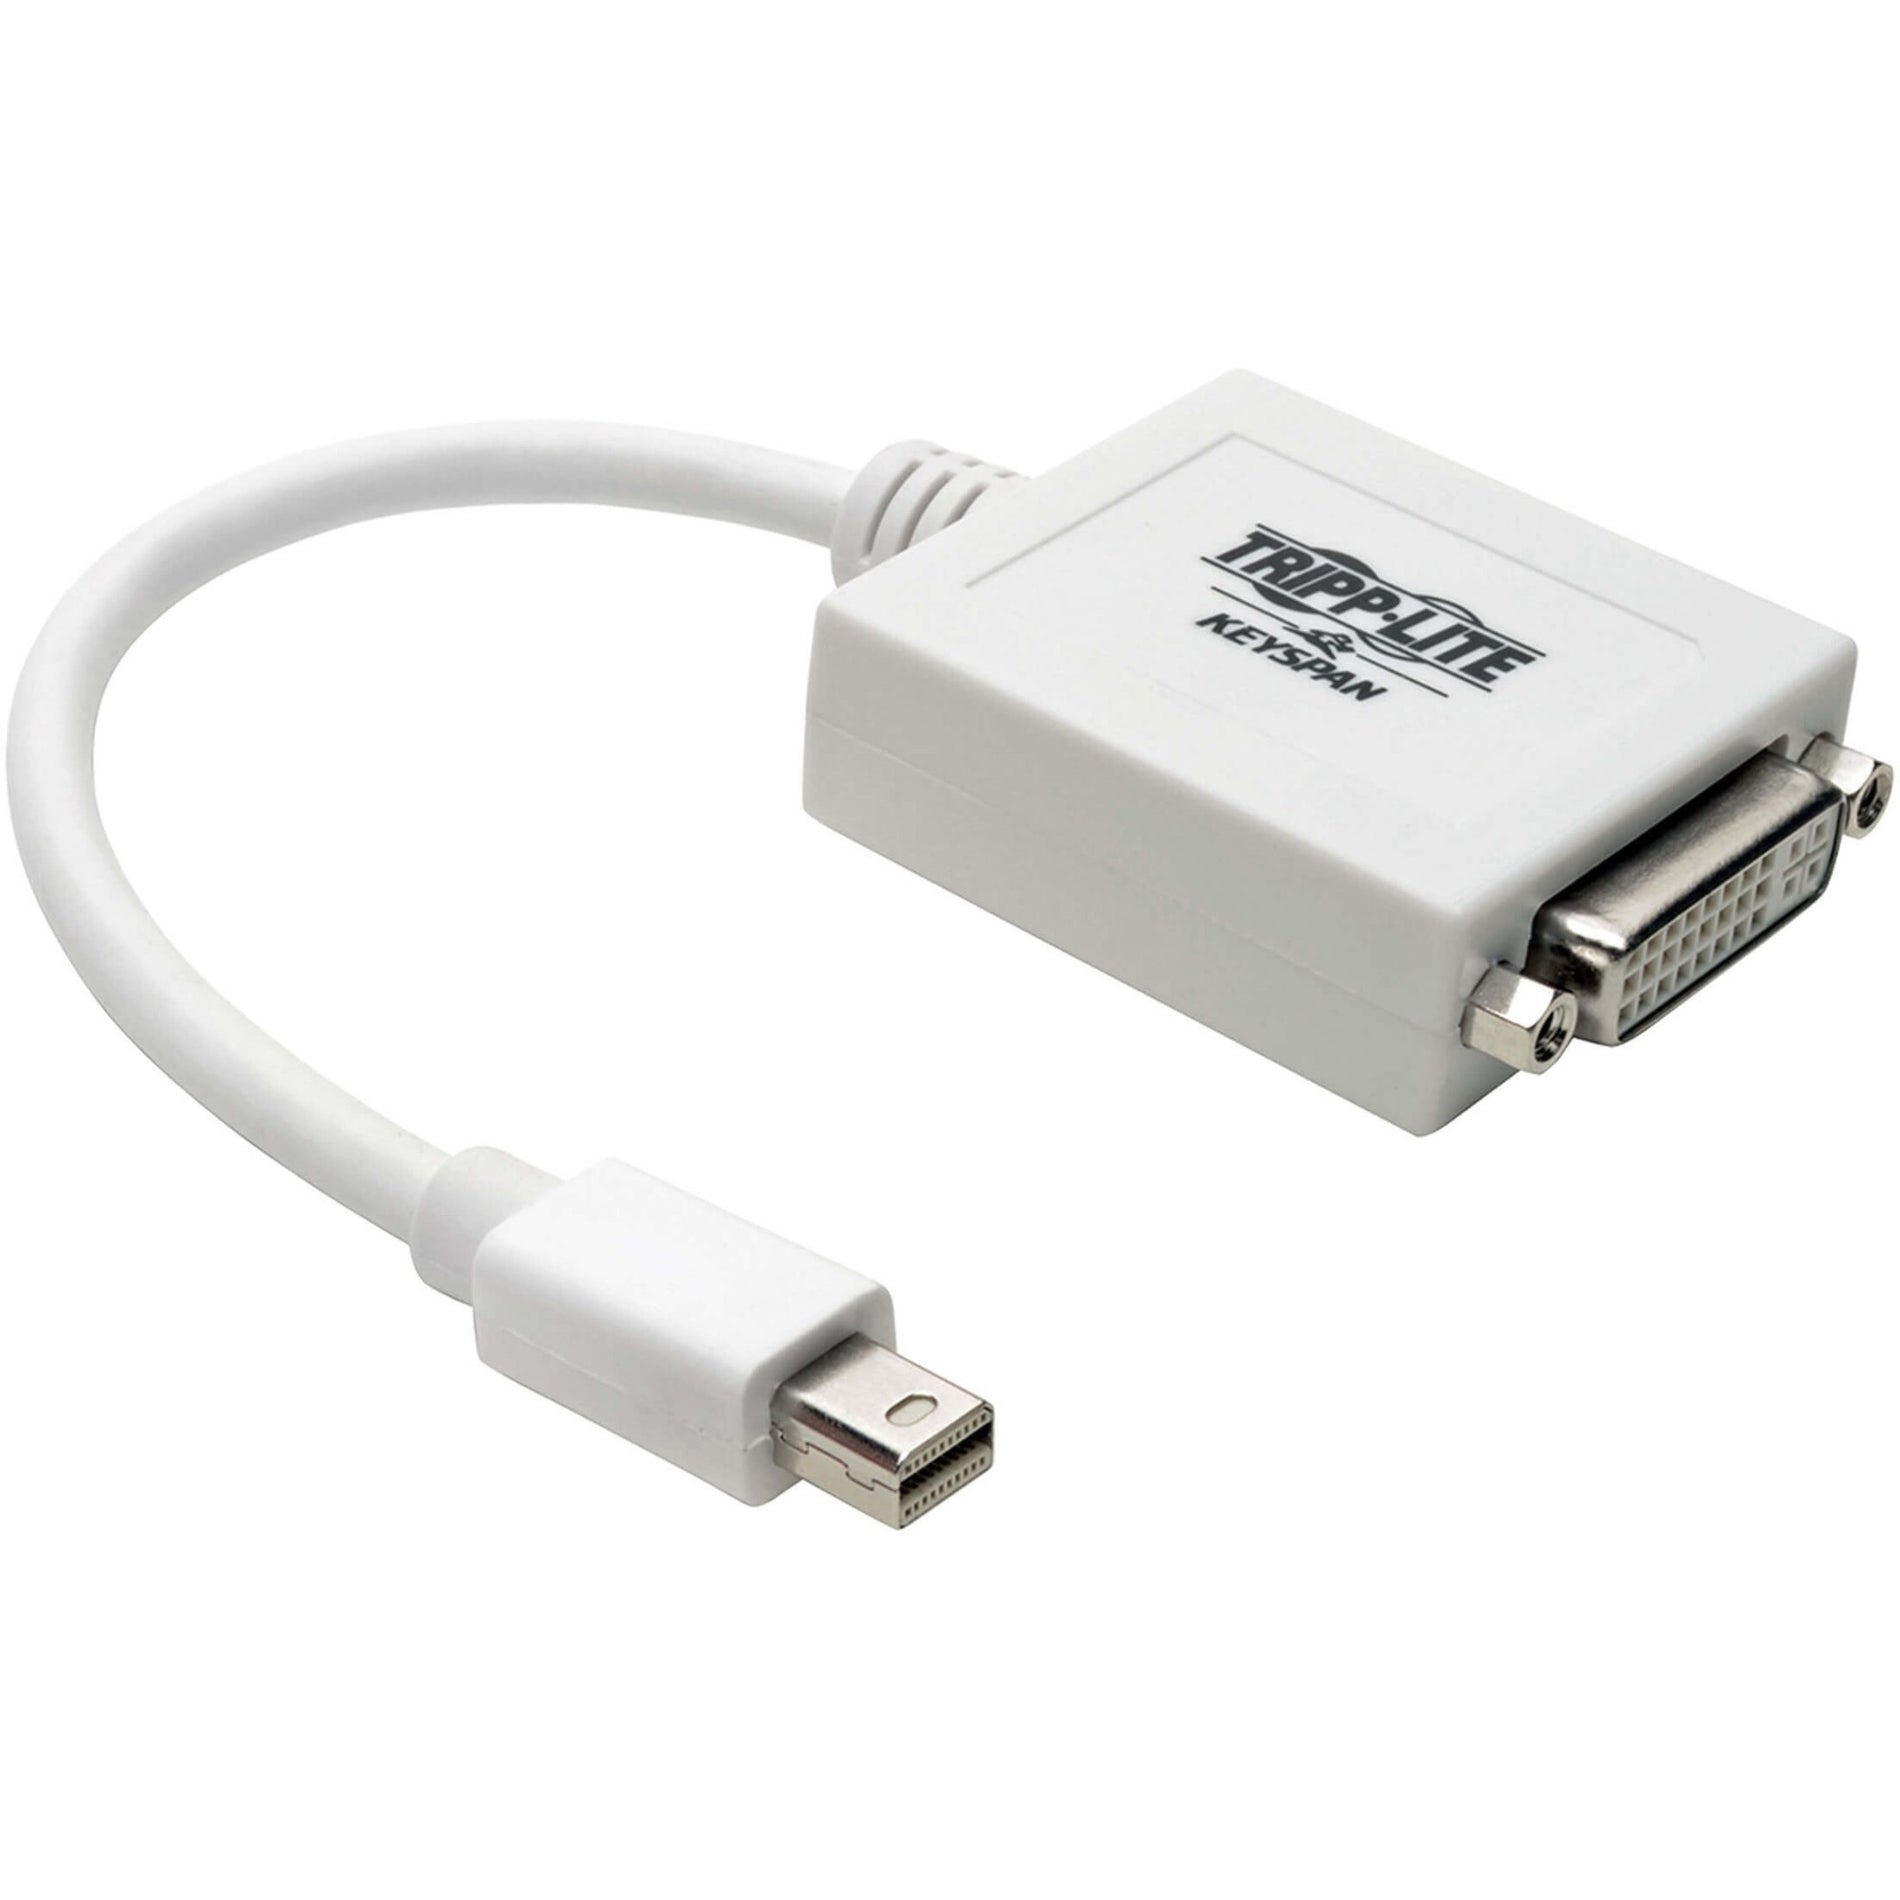 Keyspan P137-06N-DVI Mini Displayport to DVI Adapter, White - Connect Mac or PC to DVI Monitor